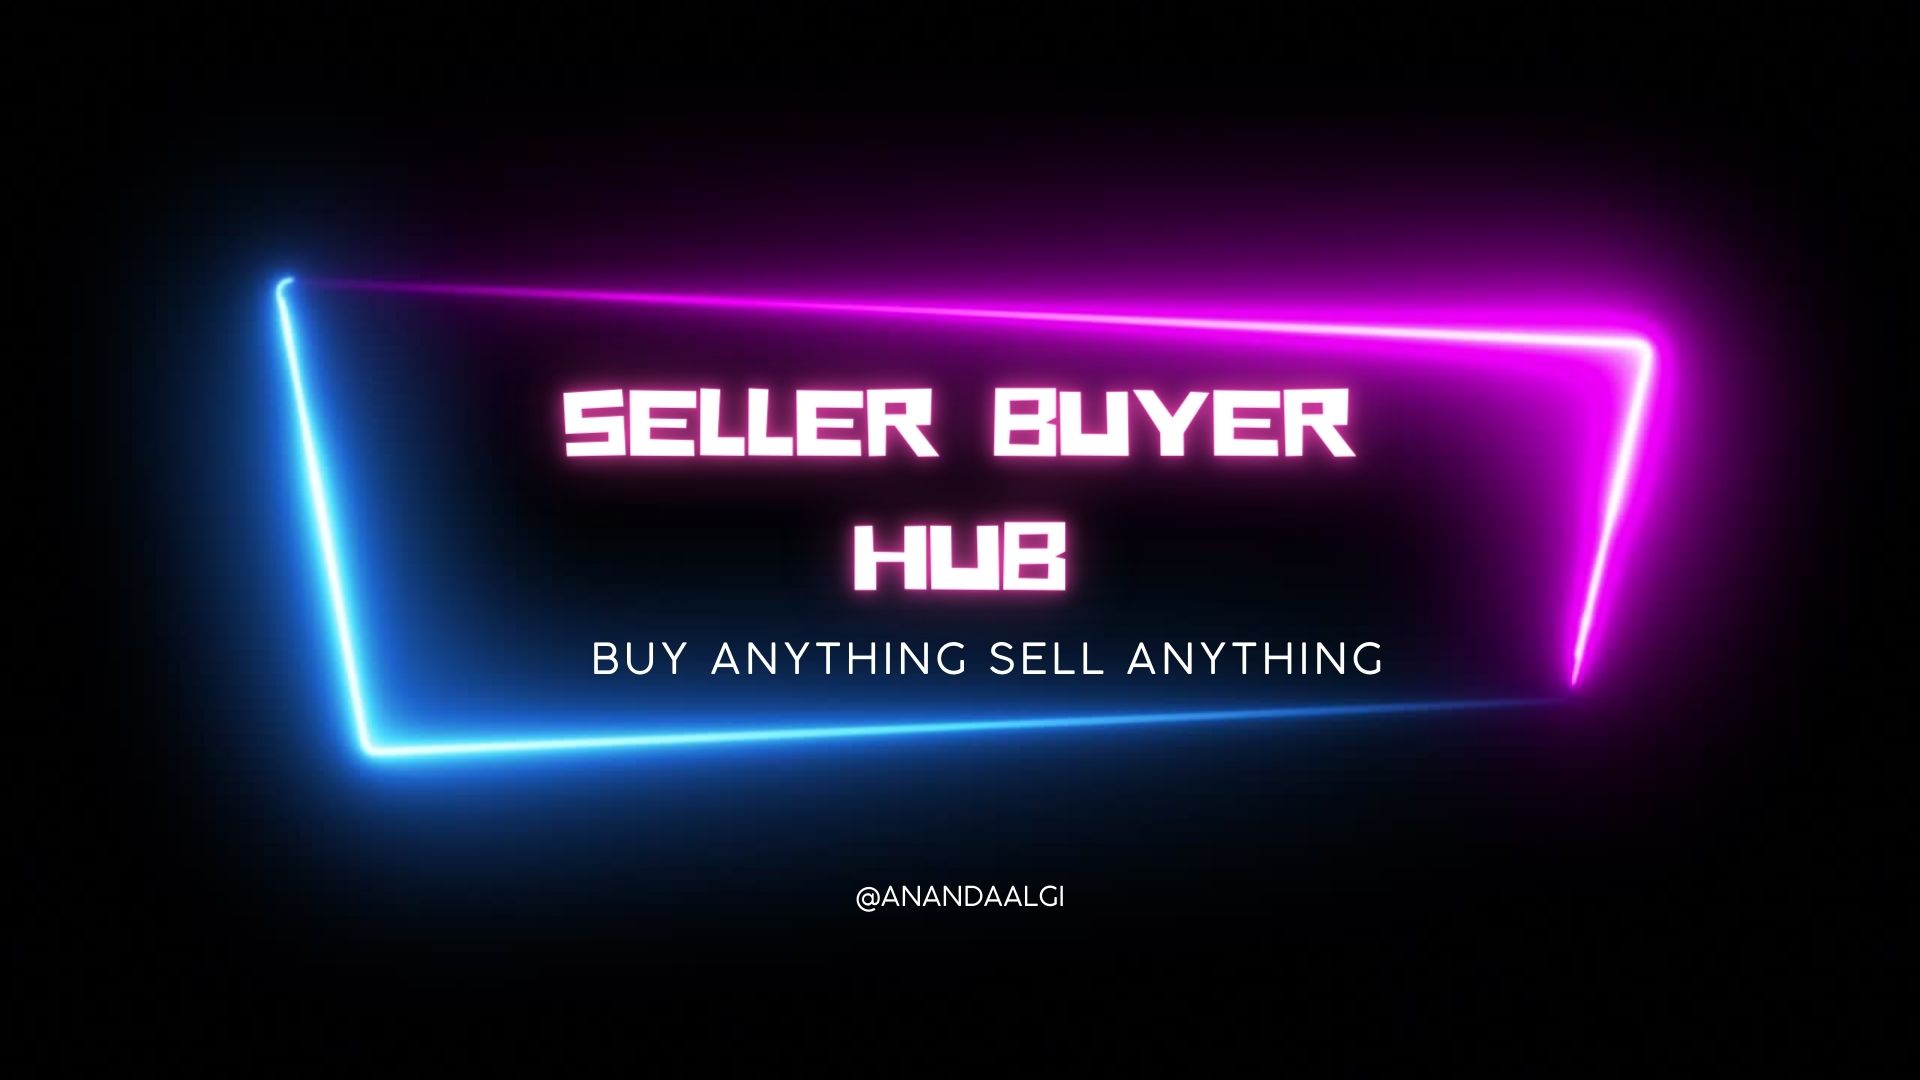 Seller Buyer Hub